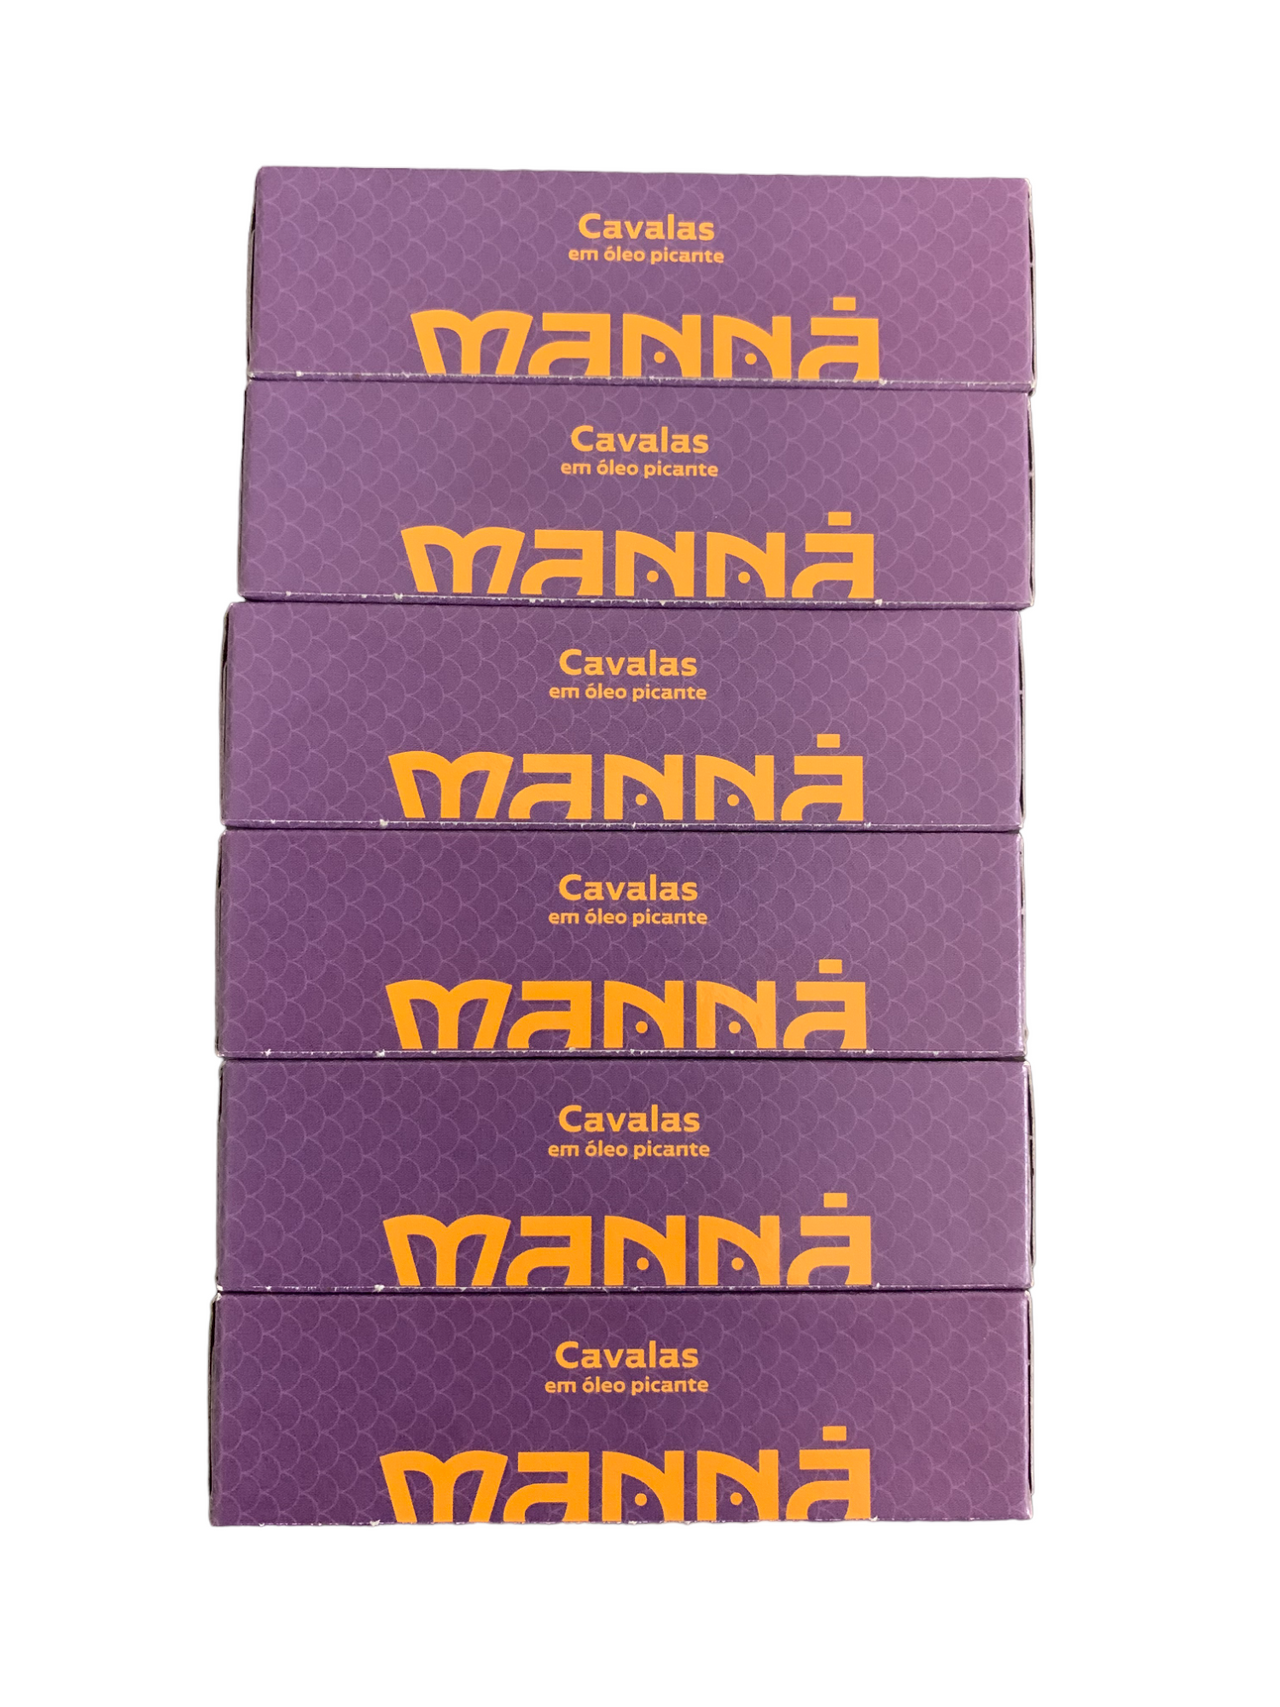 Manná Mackerel in Hot Vegetable Oil - 6 Pack - TinCanFish